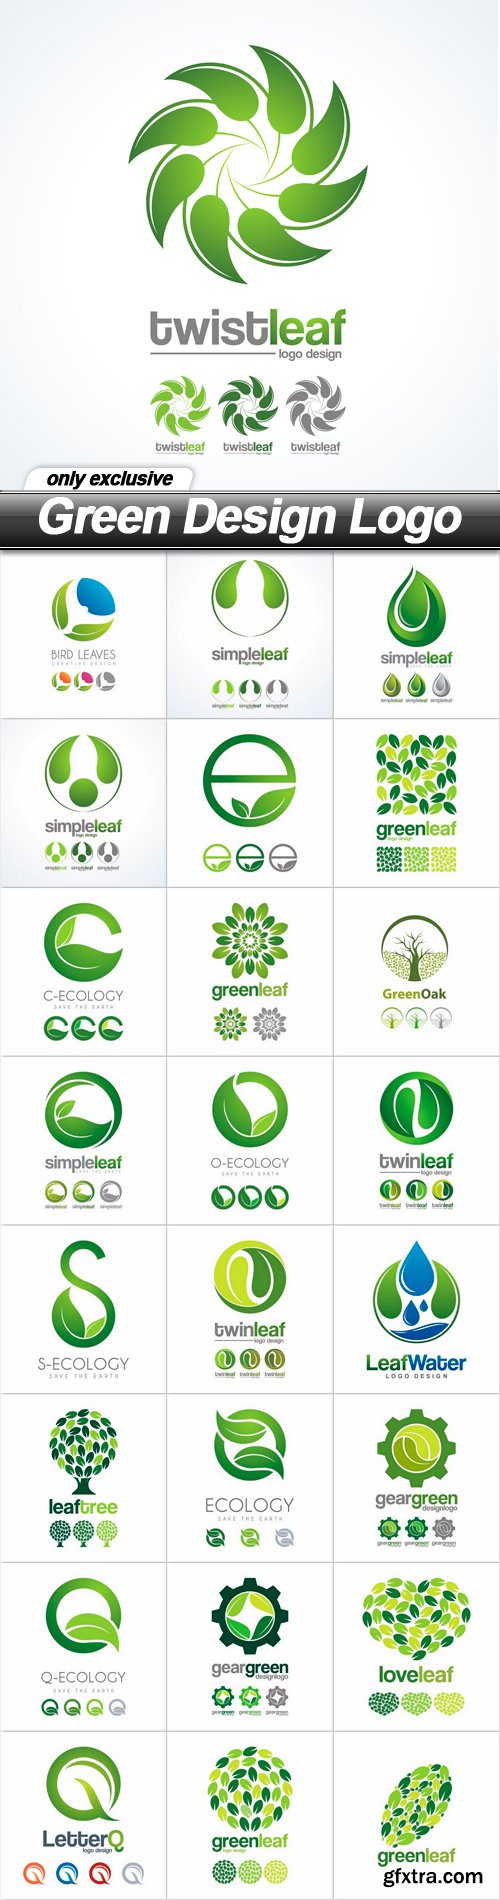 Green Design Logo - 25 EPS